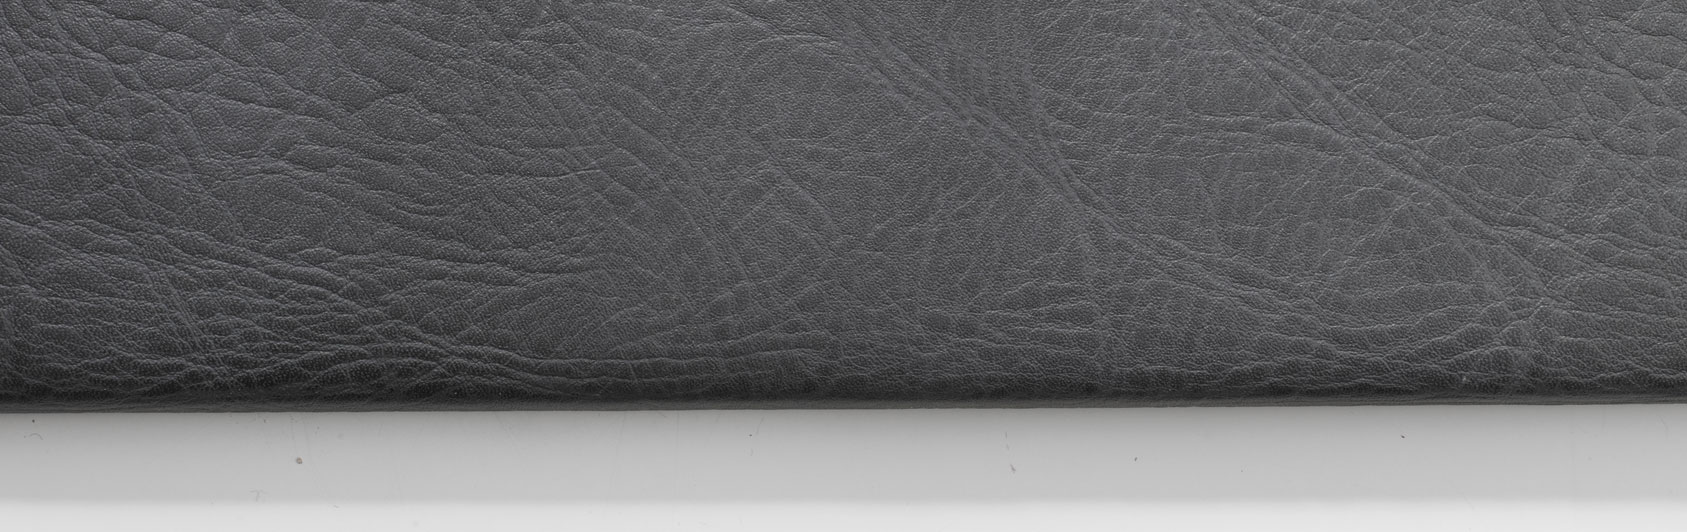 Muster Kniepolster Kunstleder Farbe grau